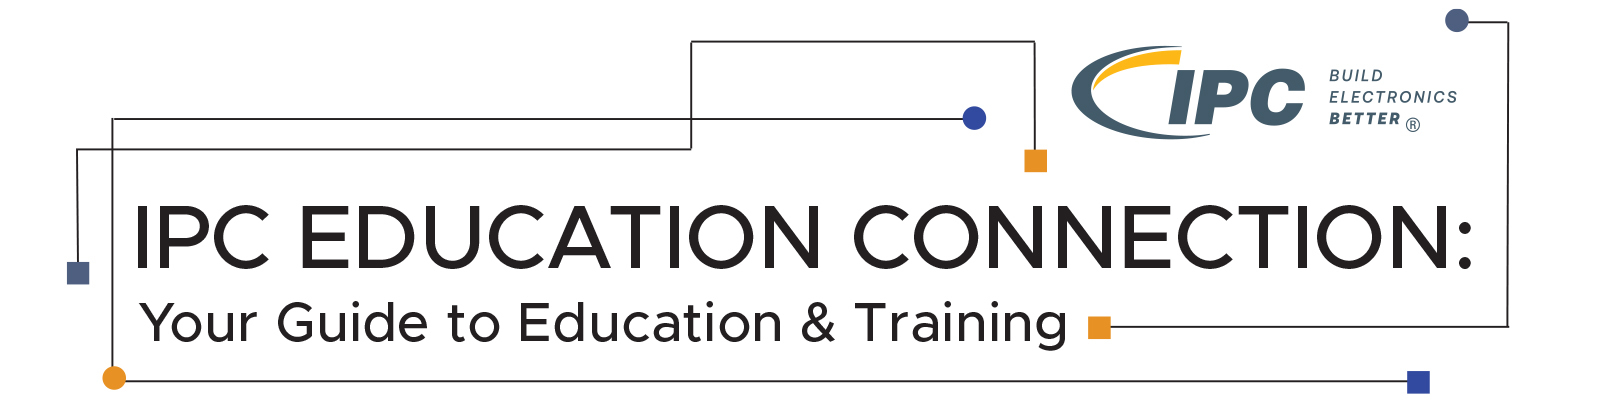 IPC Education Connection